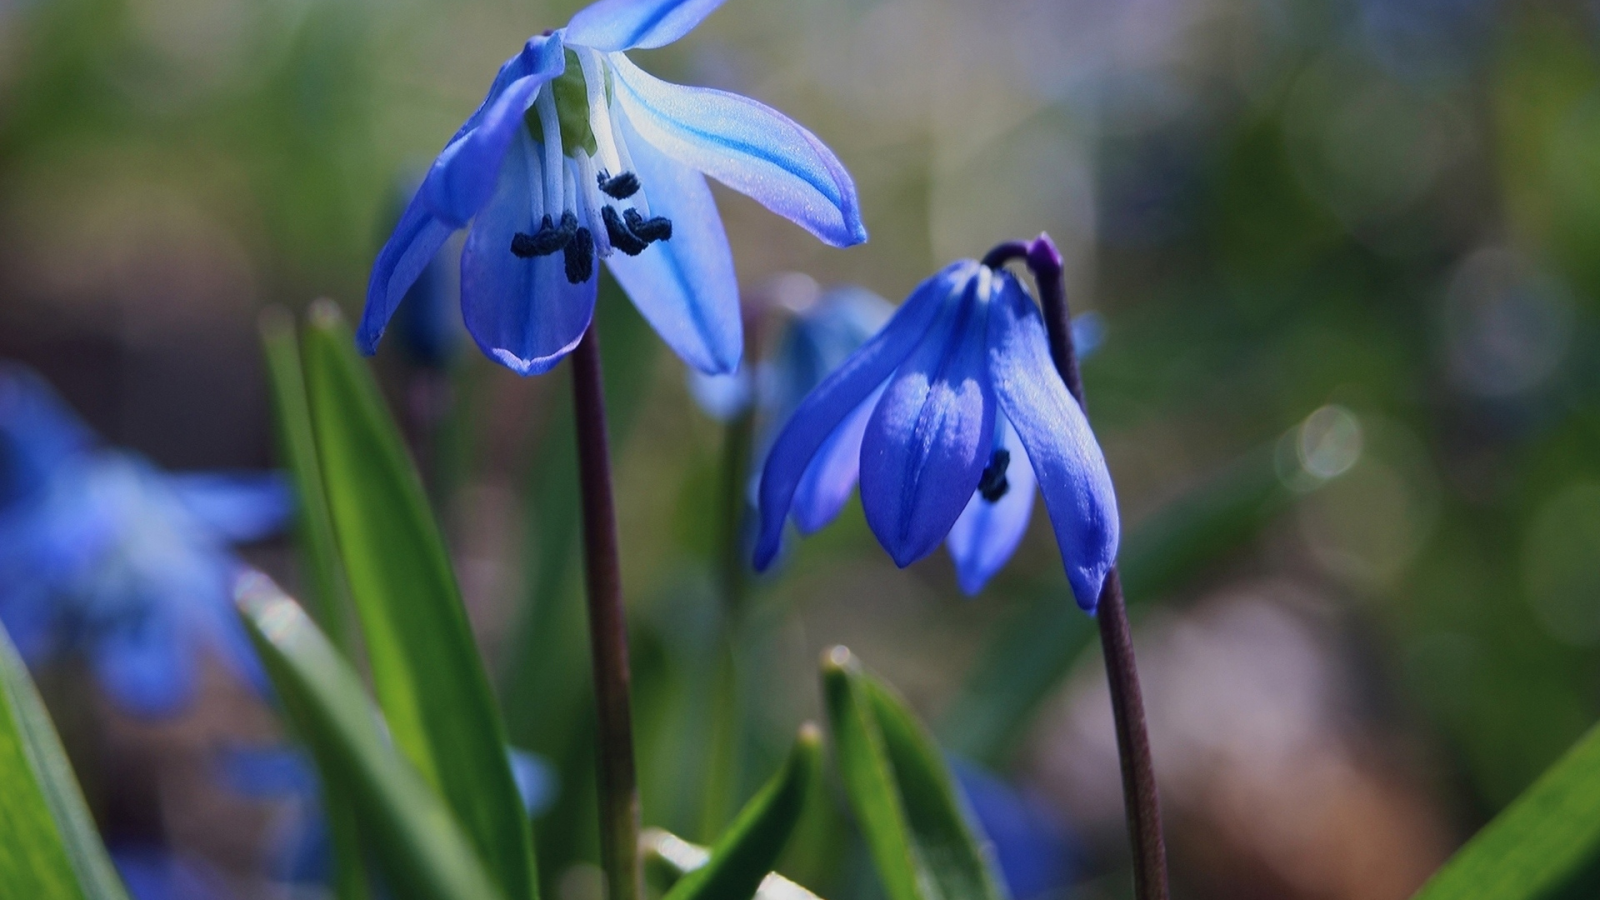 Синие весенние цветы